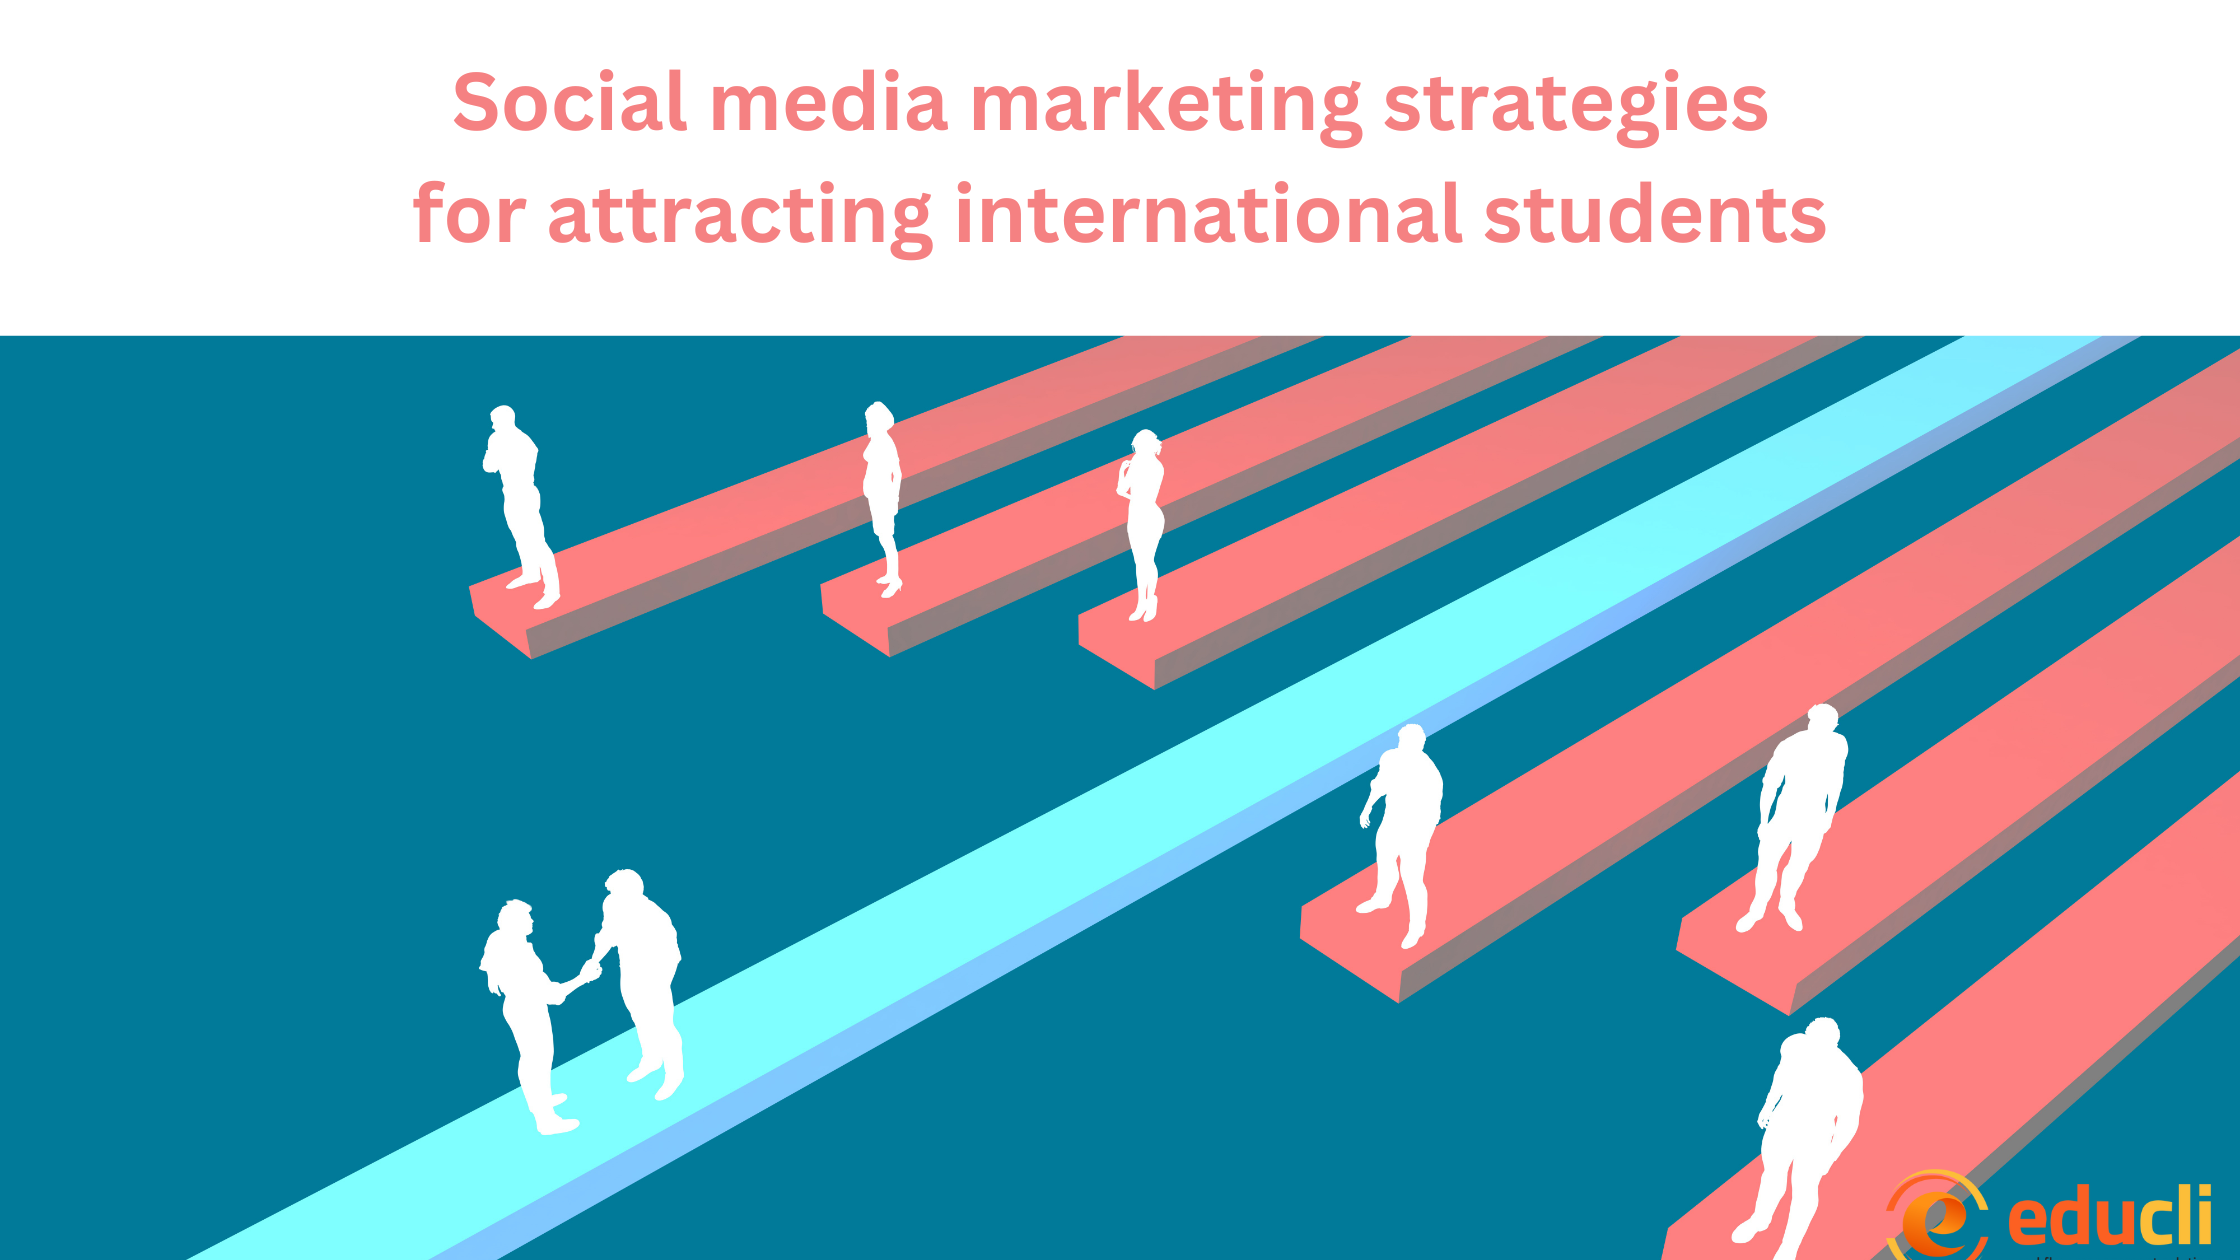 Marketing to international students using social media channels